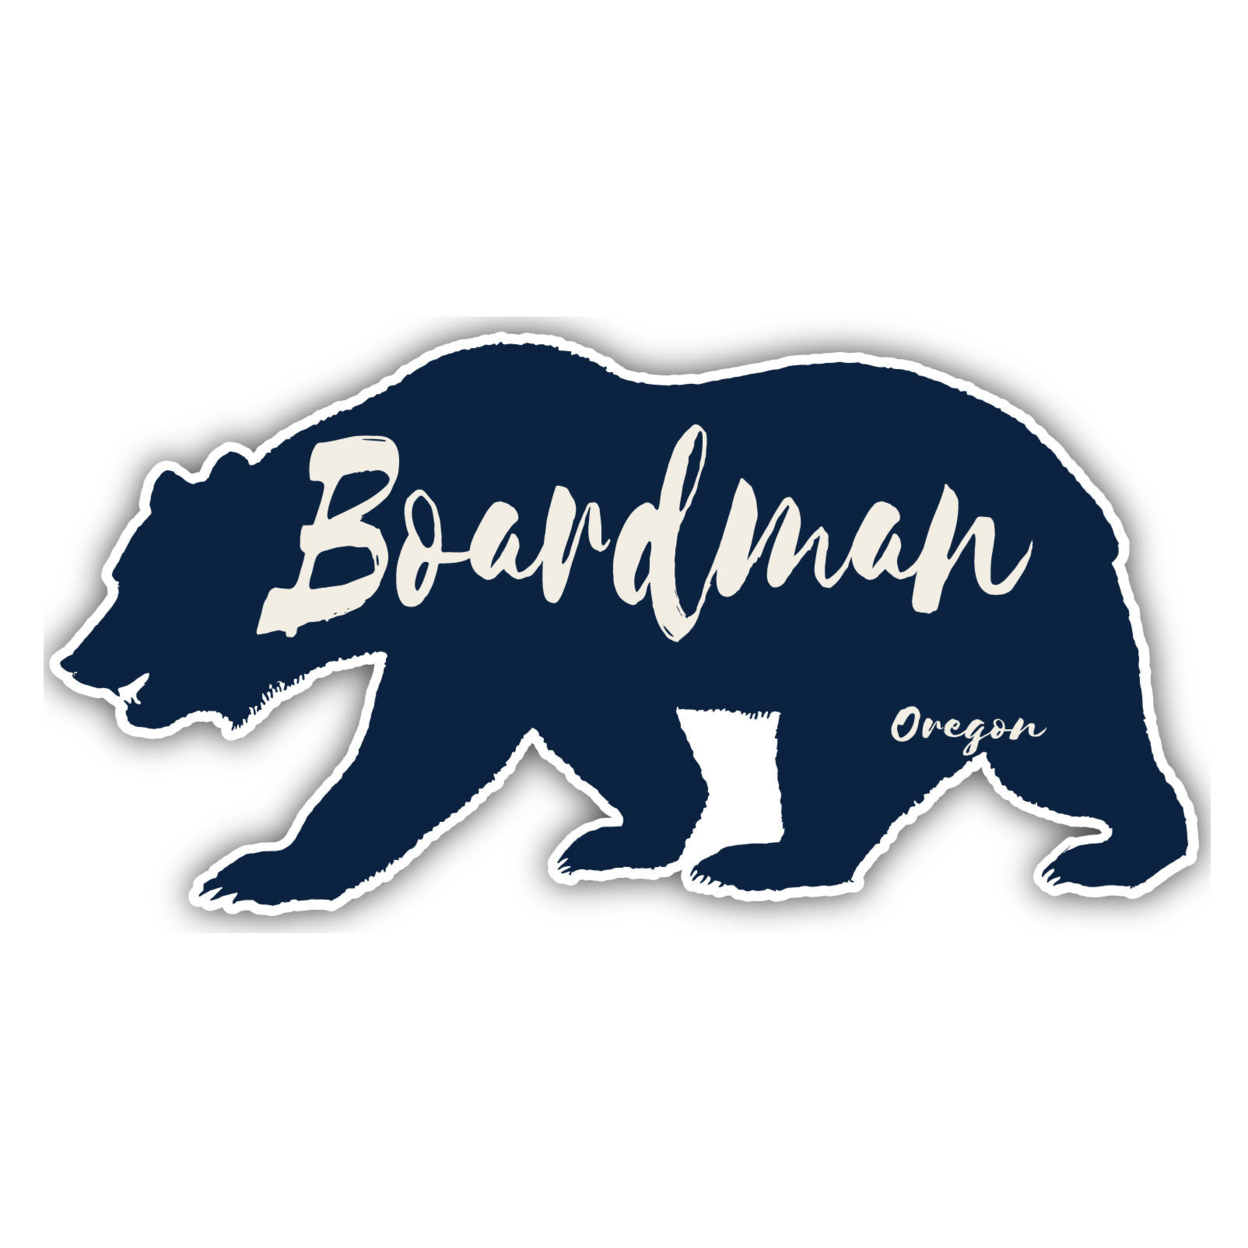 Boardman Oregon Souvenir Decorative Stickers (Choose Theme And Size) - 4-Pack, 10-Inch, Tent